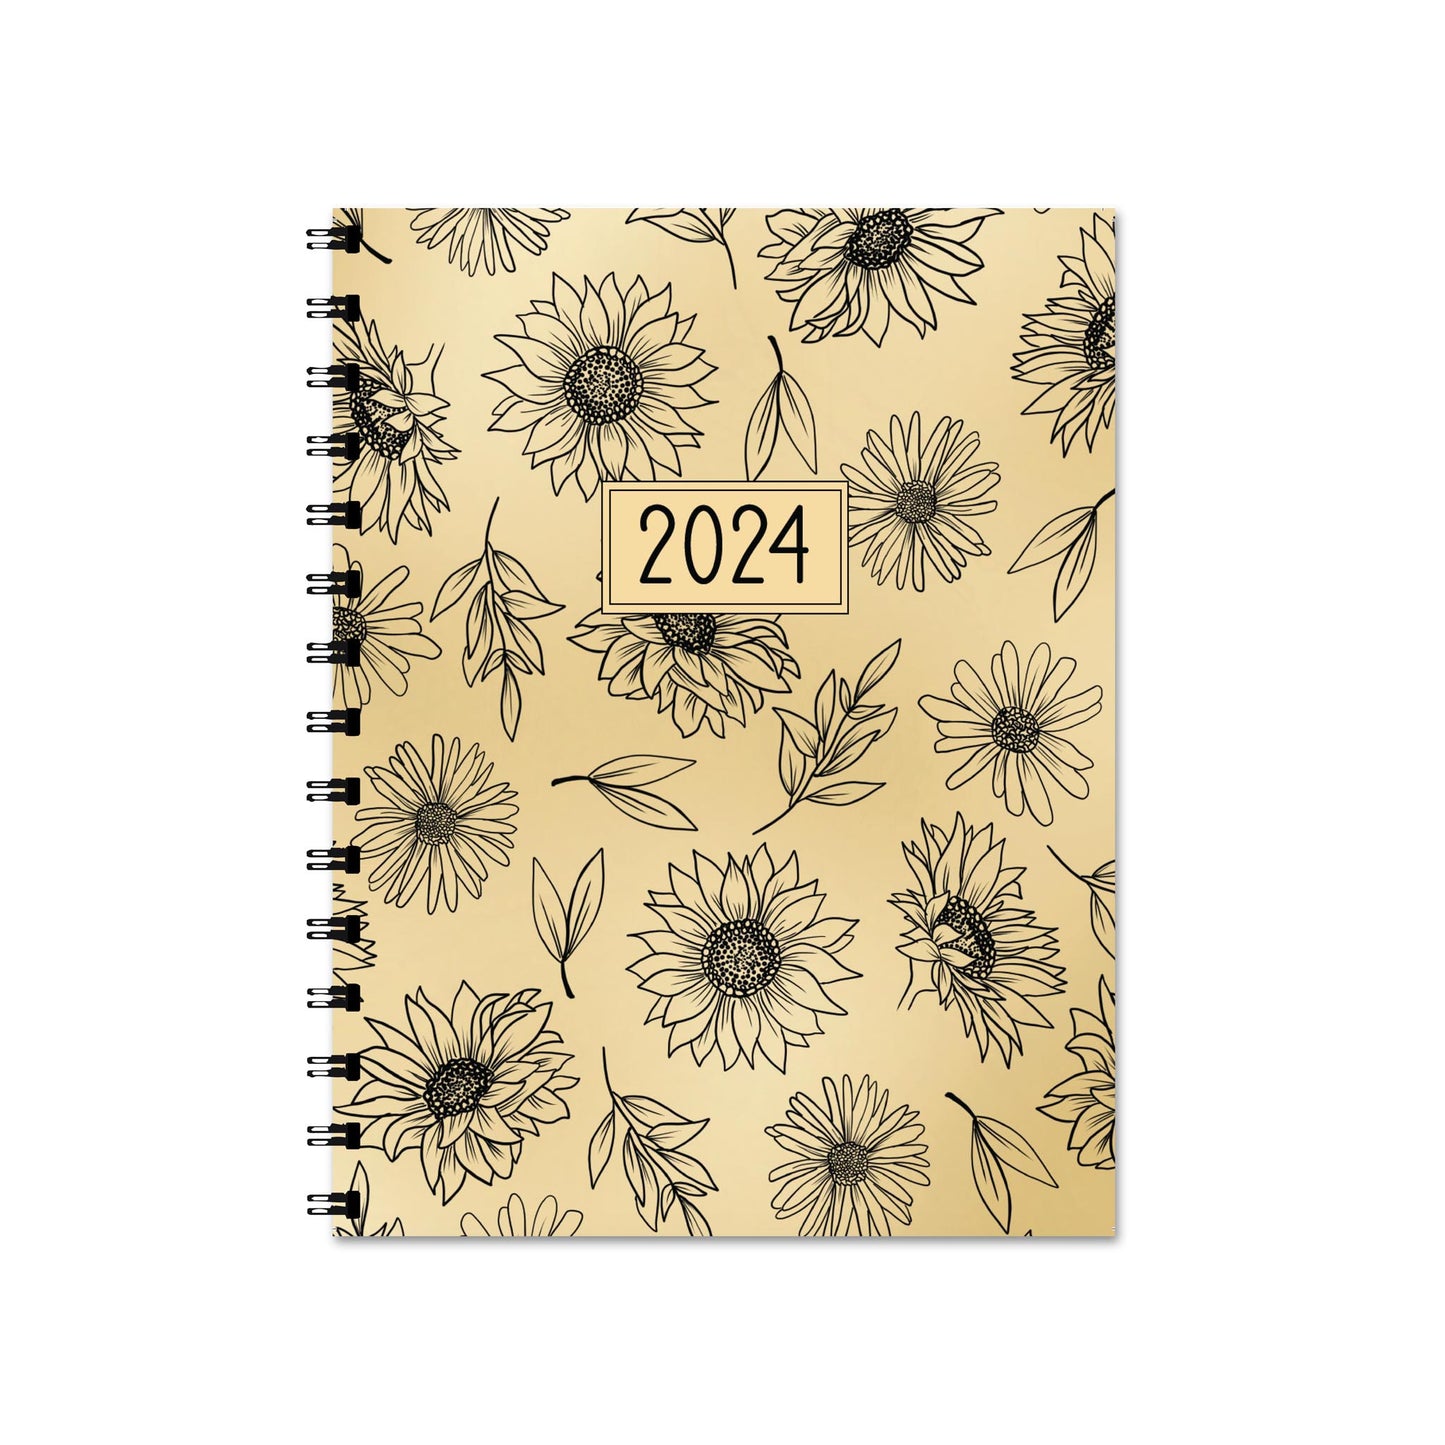 **PRE-ORDER** - 2024 Sunflower Floral Agenda